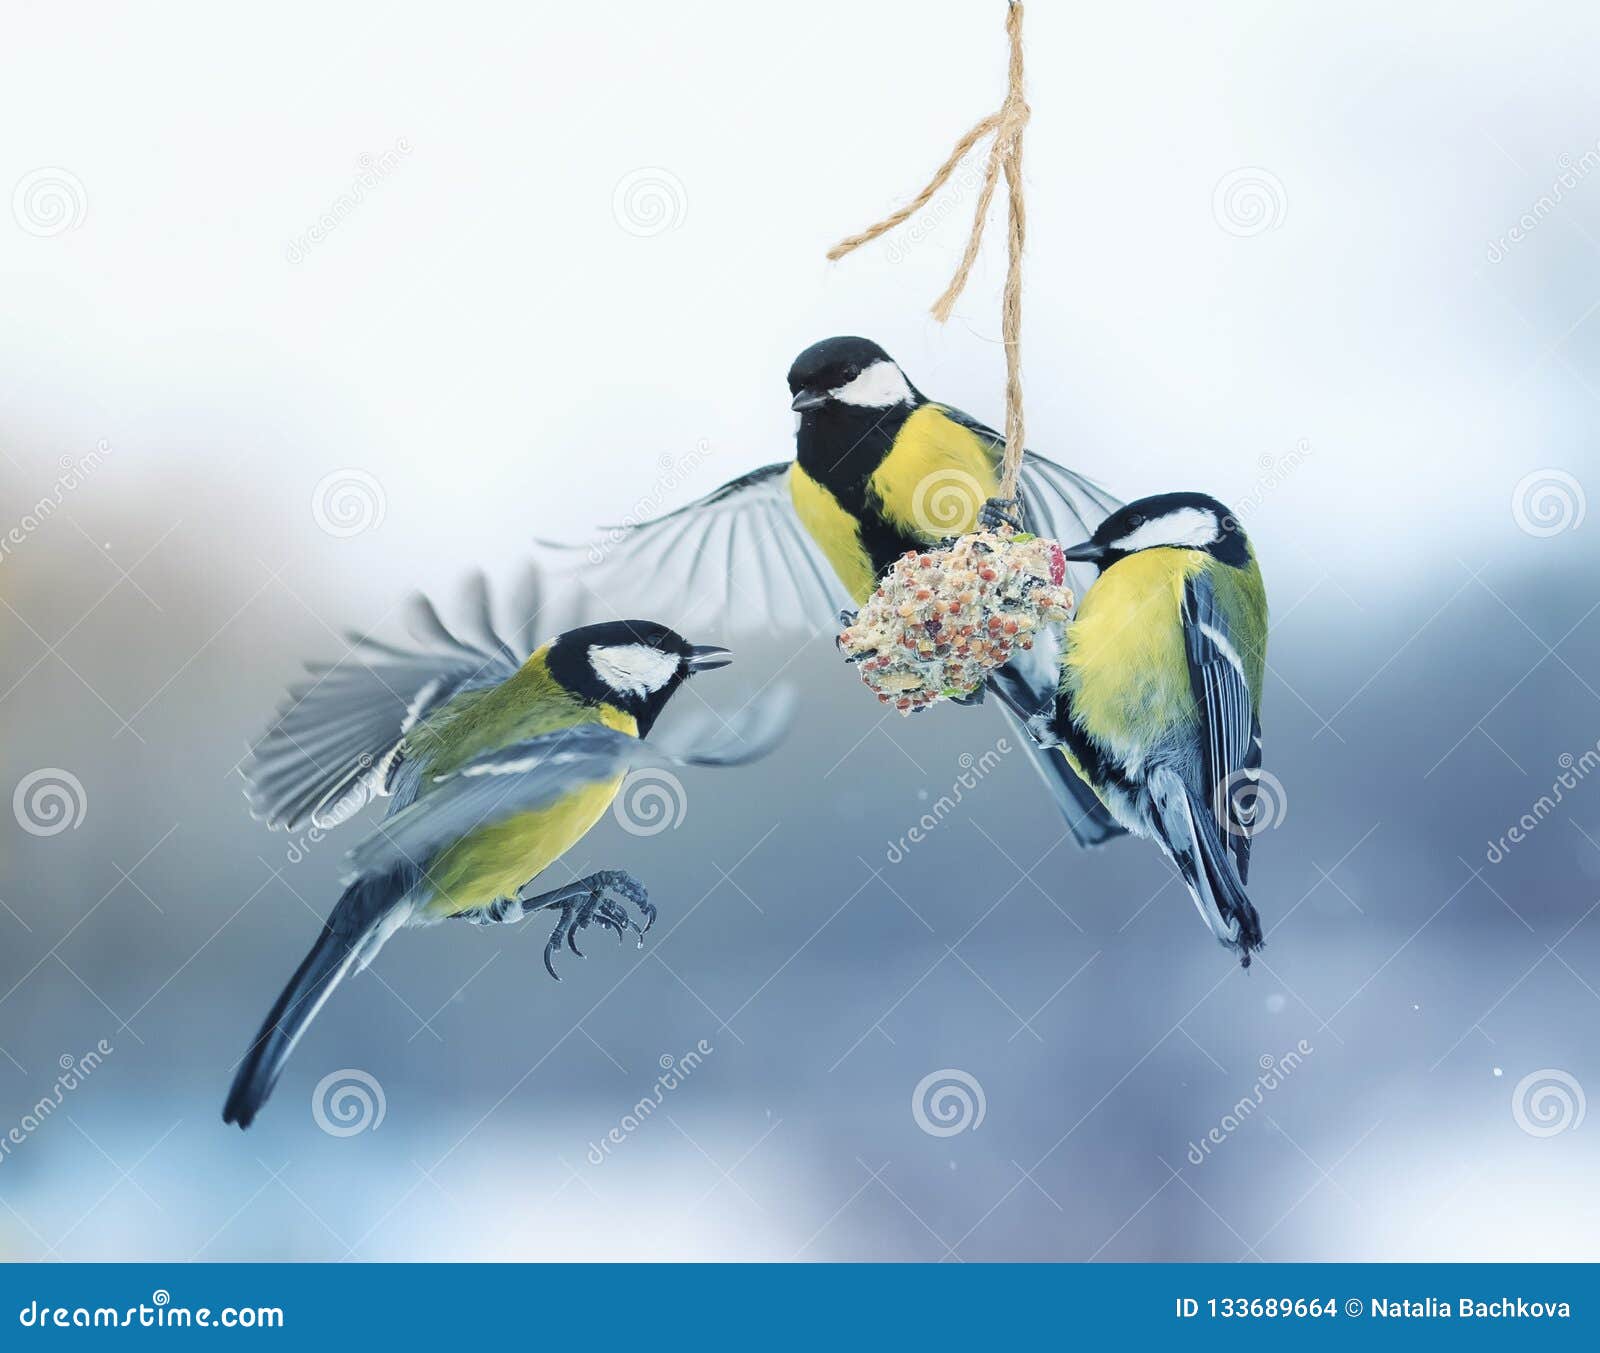 https://thumbs.dreamstime.com/z/three-beautiful-hungry-little-bird-tits-flew-hanging-manger-three-beautiful-hungry-little-bird-tits-flew-hanging-manger-133689664.jpg